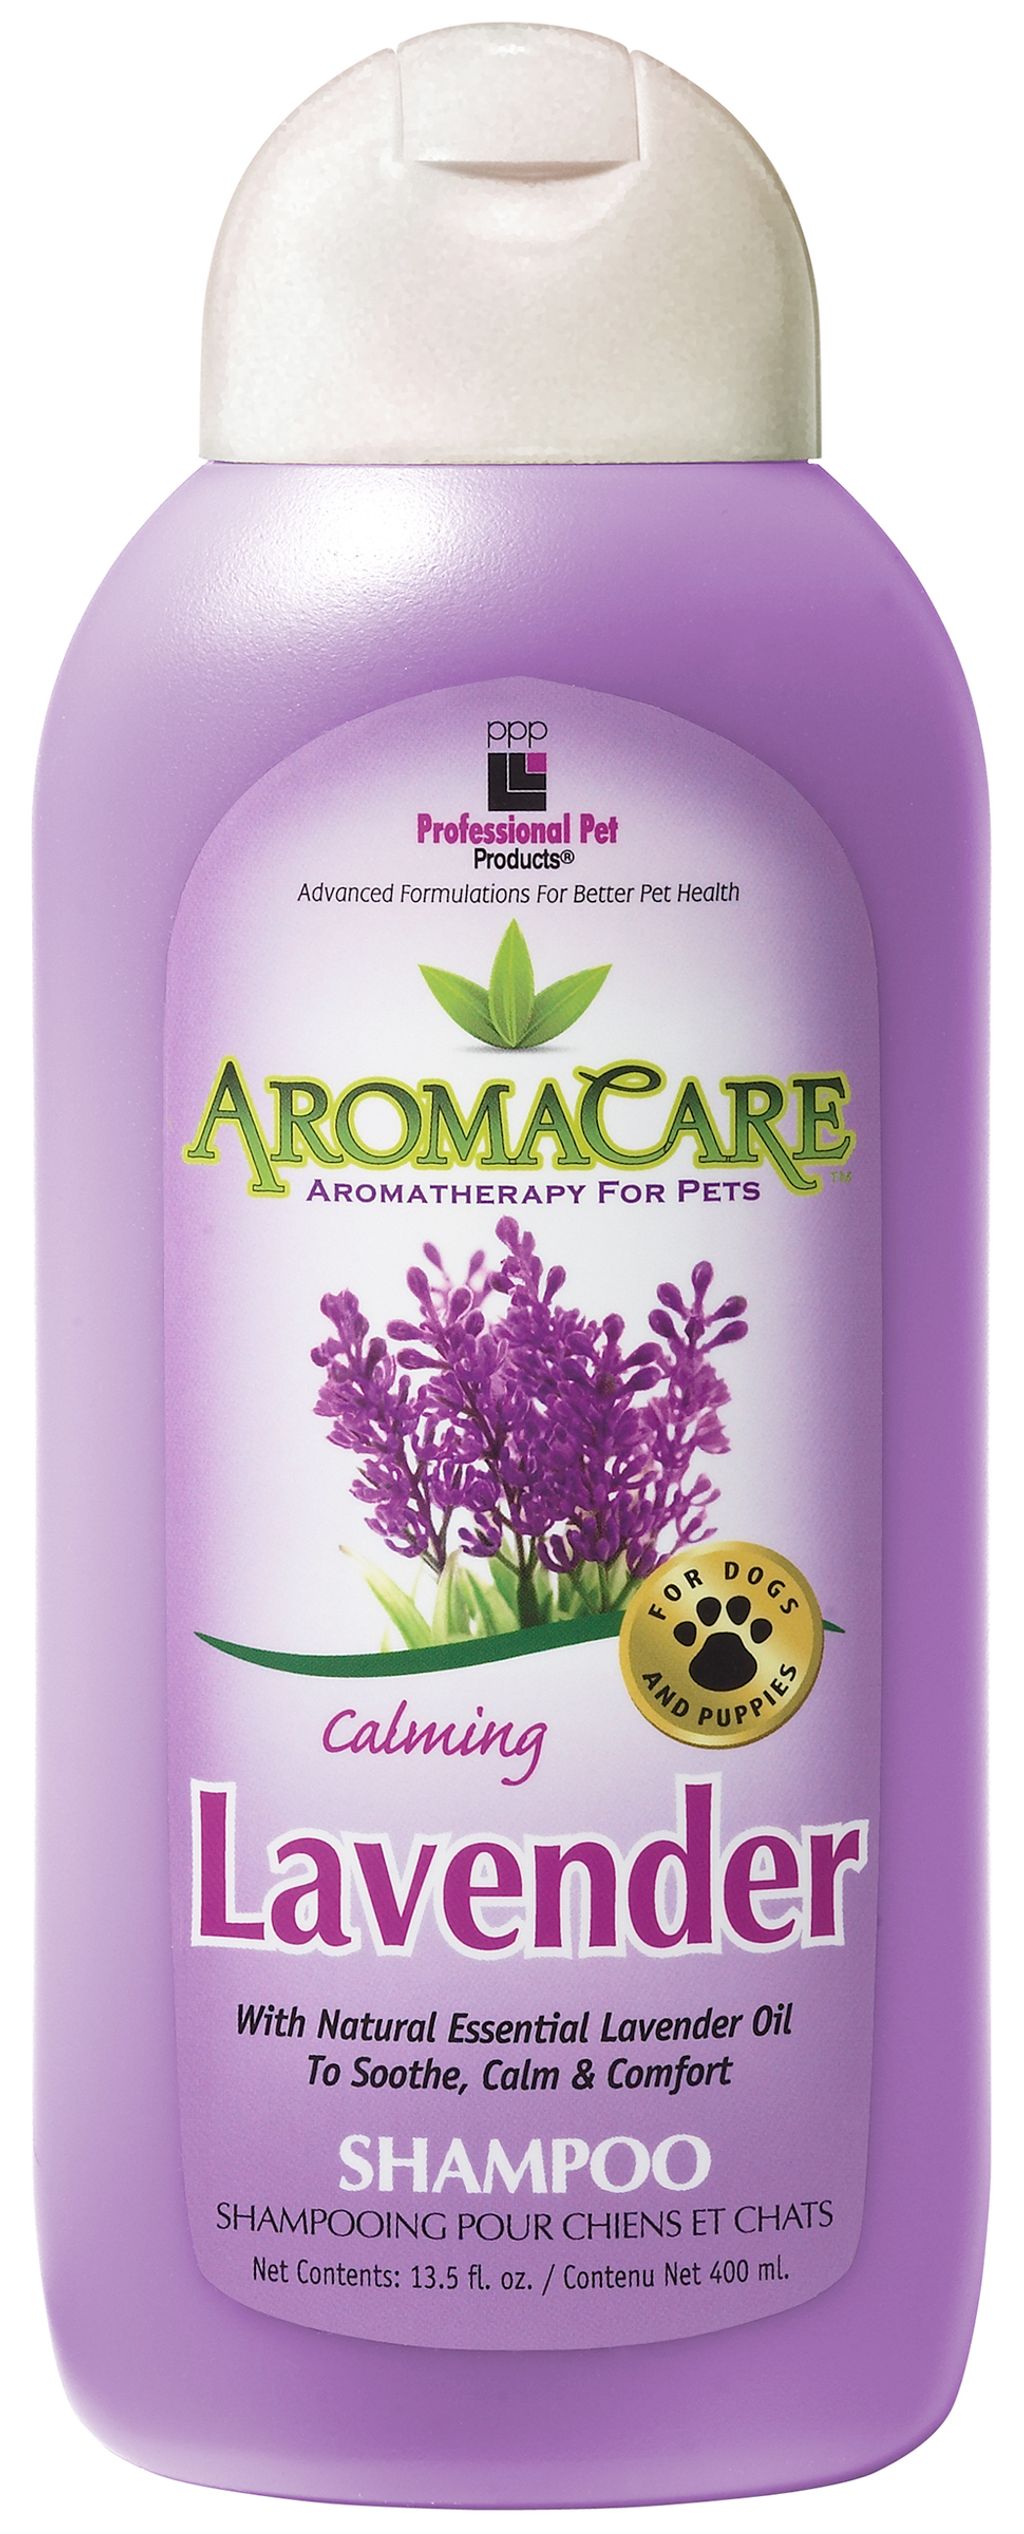 A951 Aromacare Lavender Shampoo.jpg